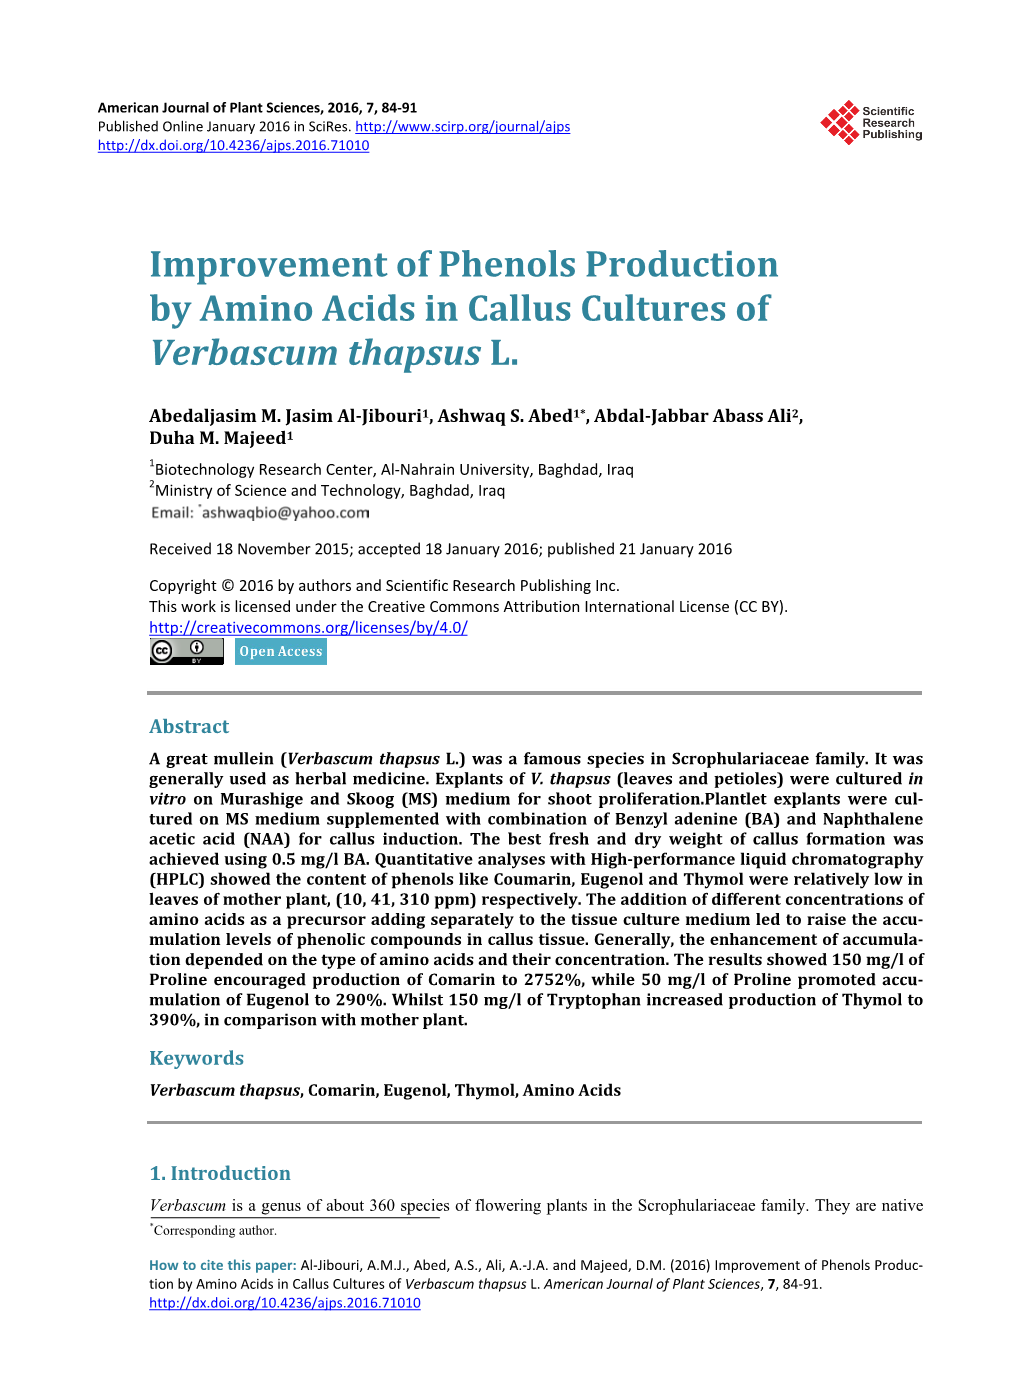 Improvement of Phenols Production by Amino Acids in Callus Cultures of Verbascum Thapsus L